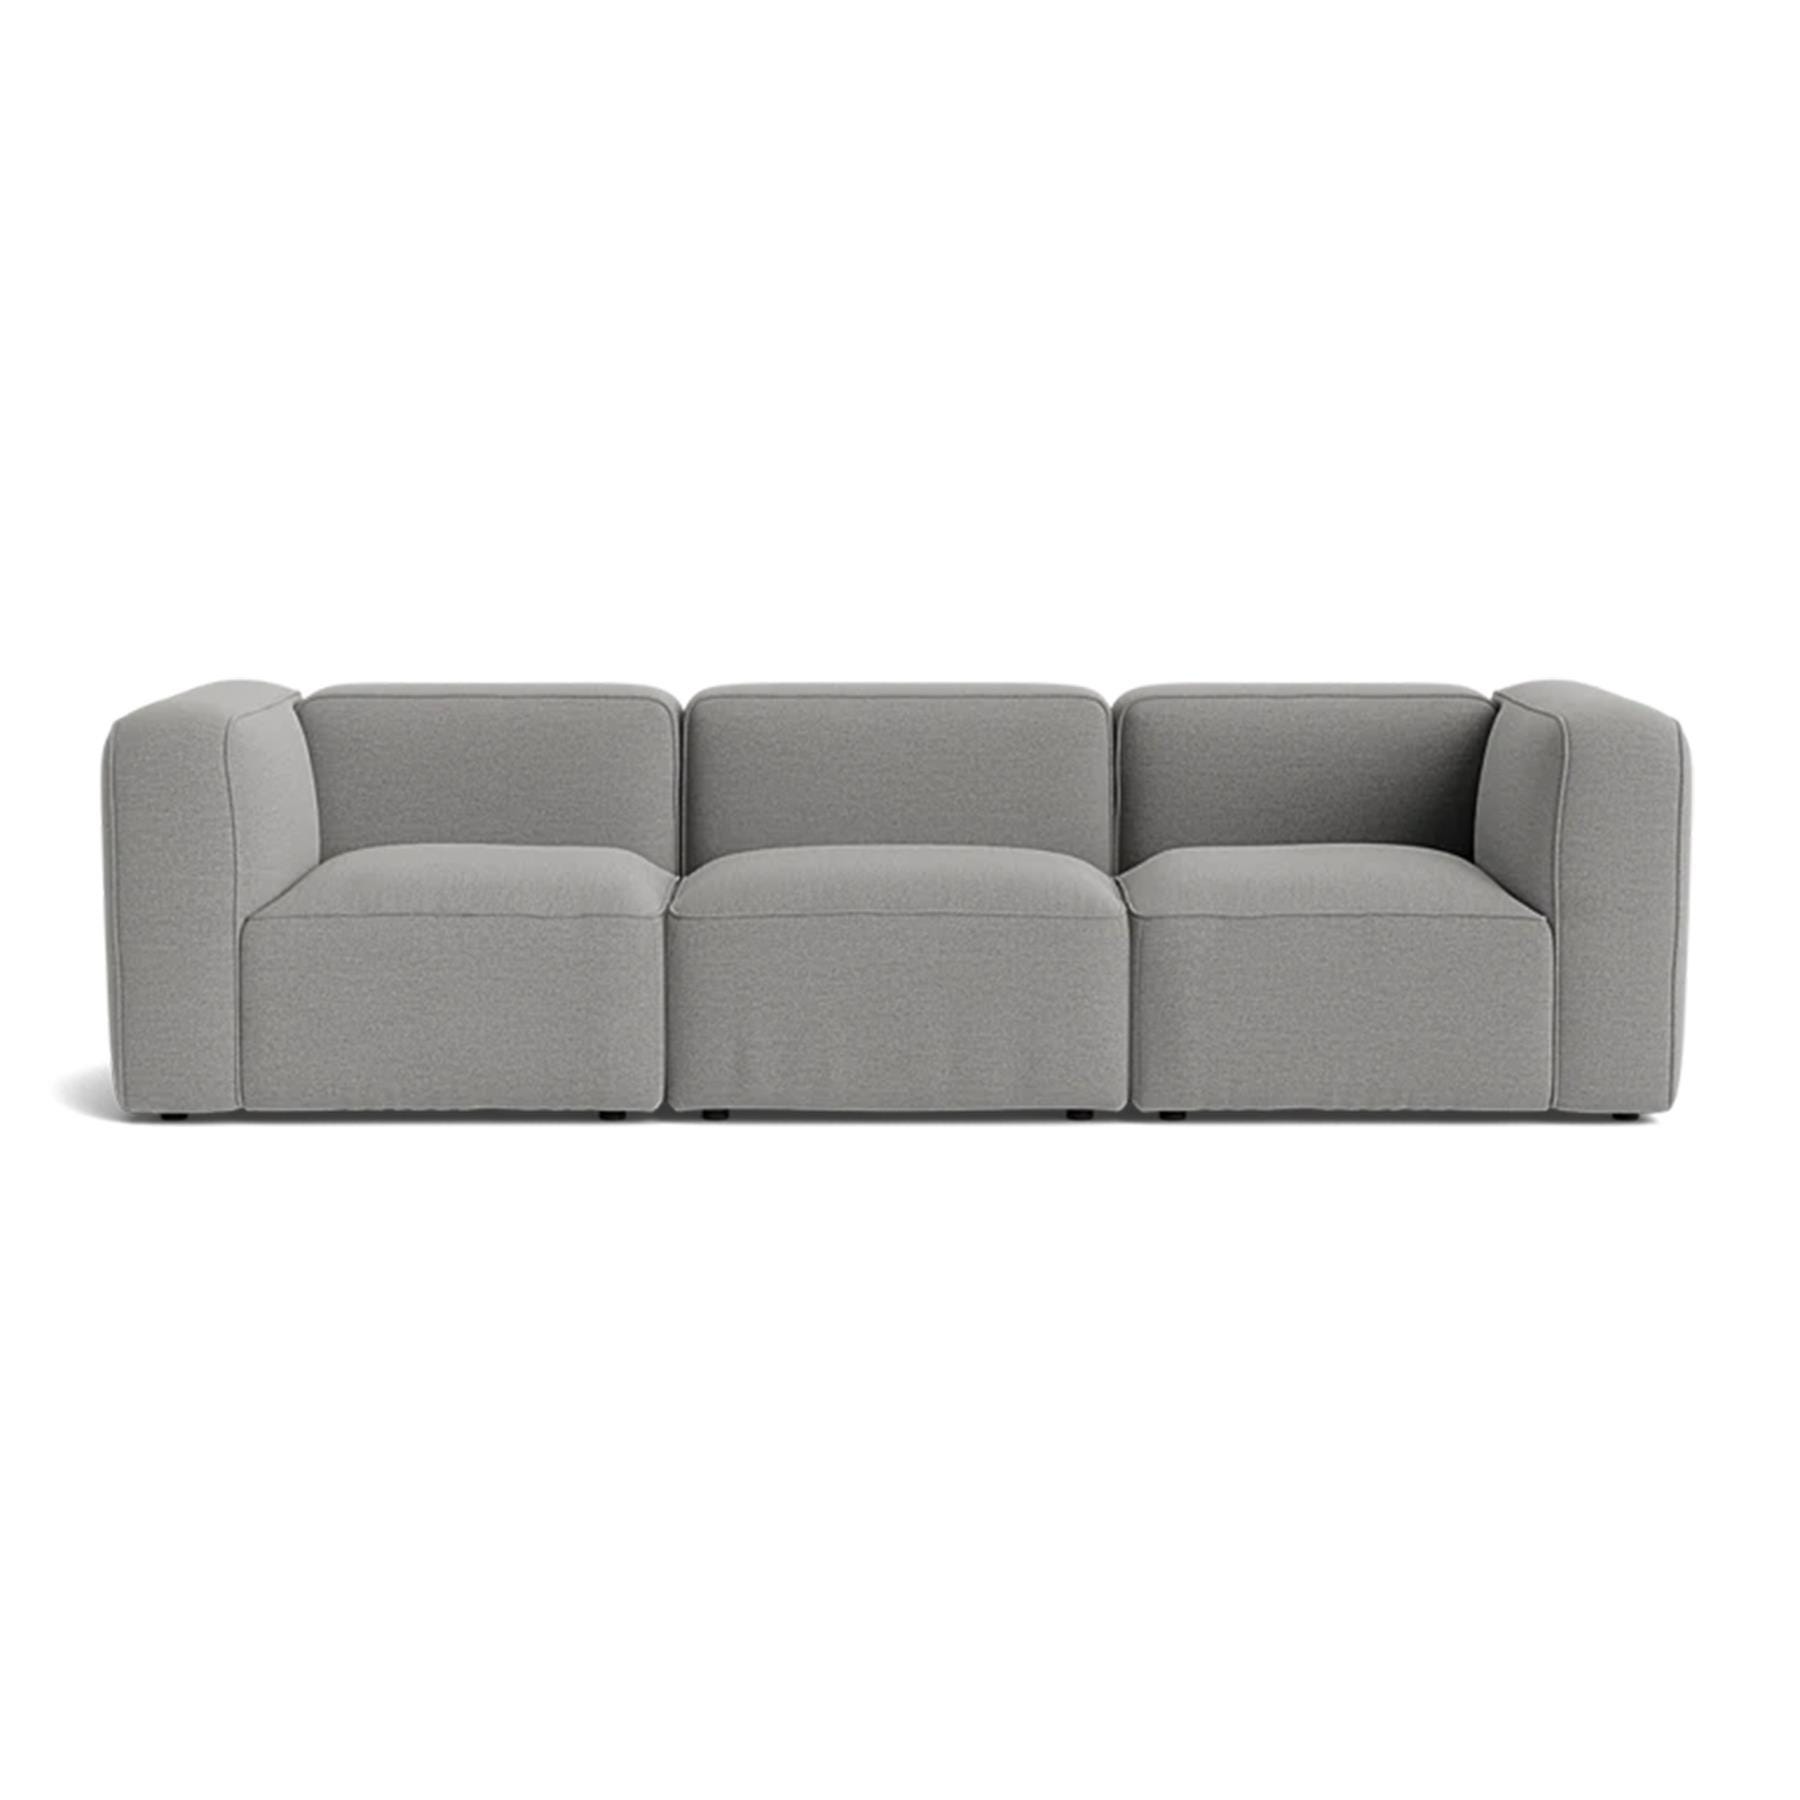 Make Nordic Basecamp 3 Seater Sofa Rewool 128 Grey Designer Furniture From Holloways Of Ludlow